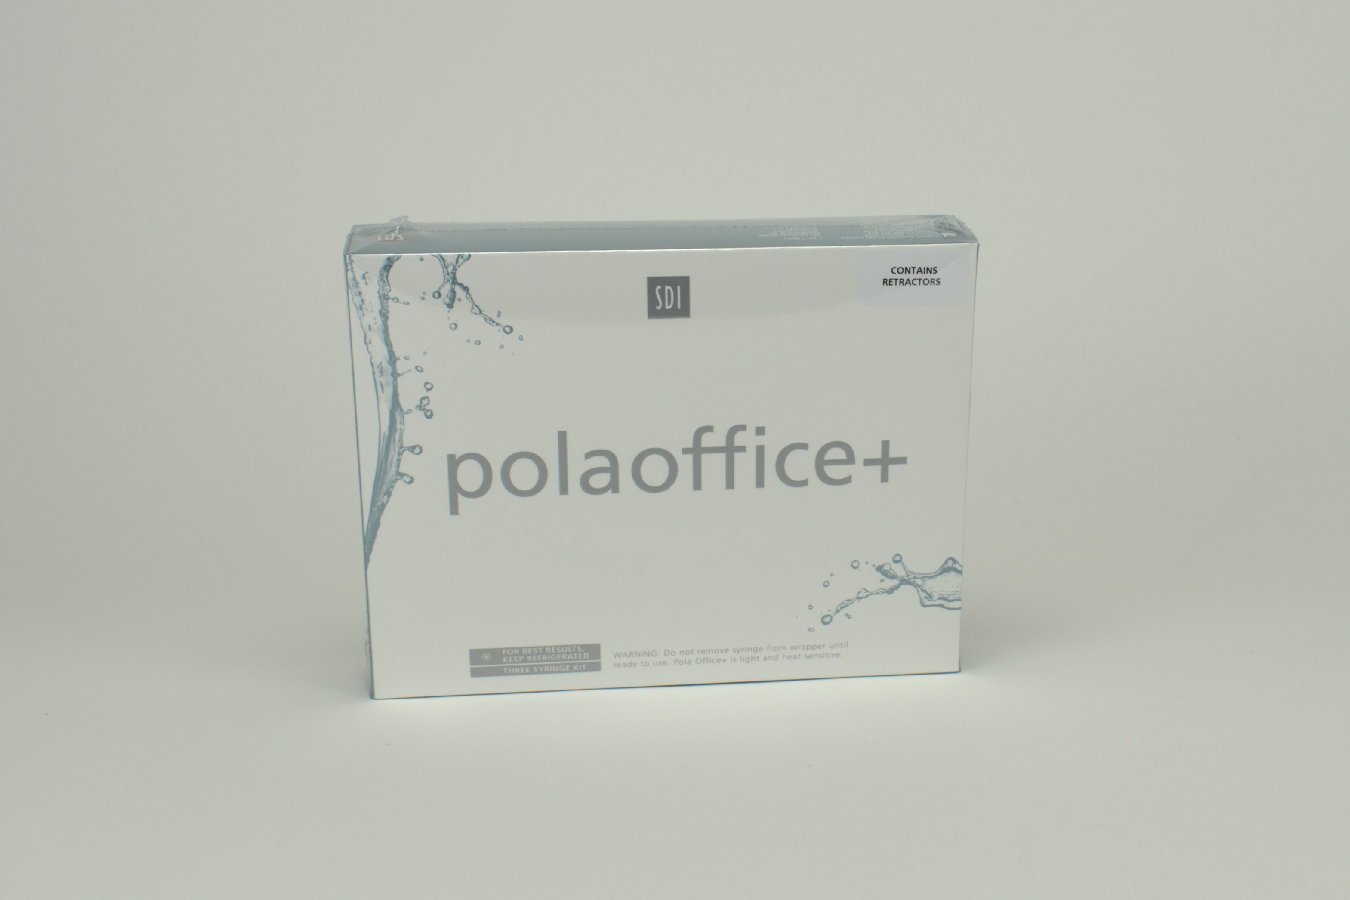 Pola Office+ 3 Pat. mit Optragate Kit